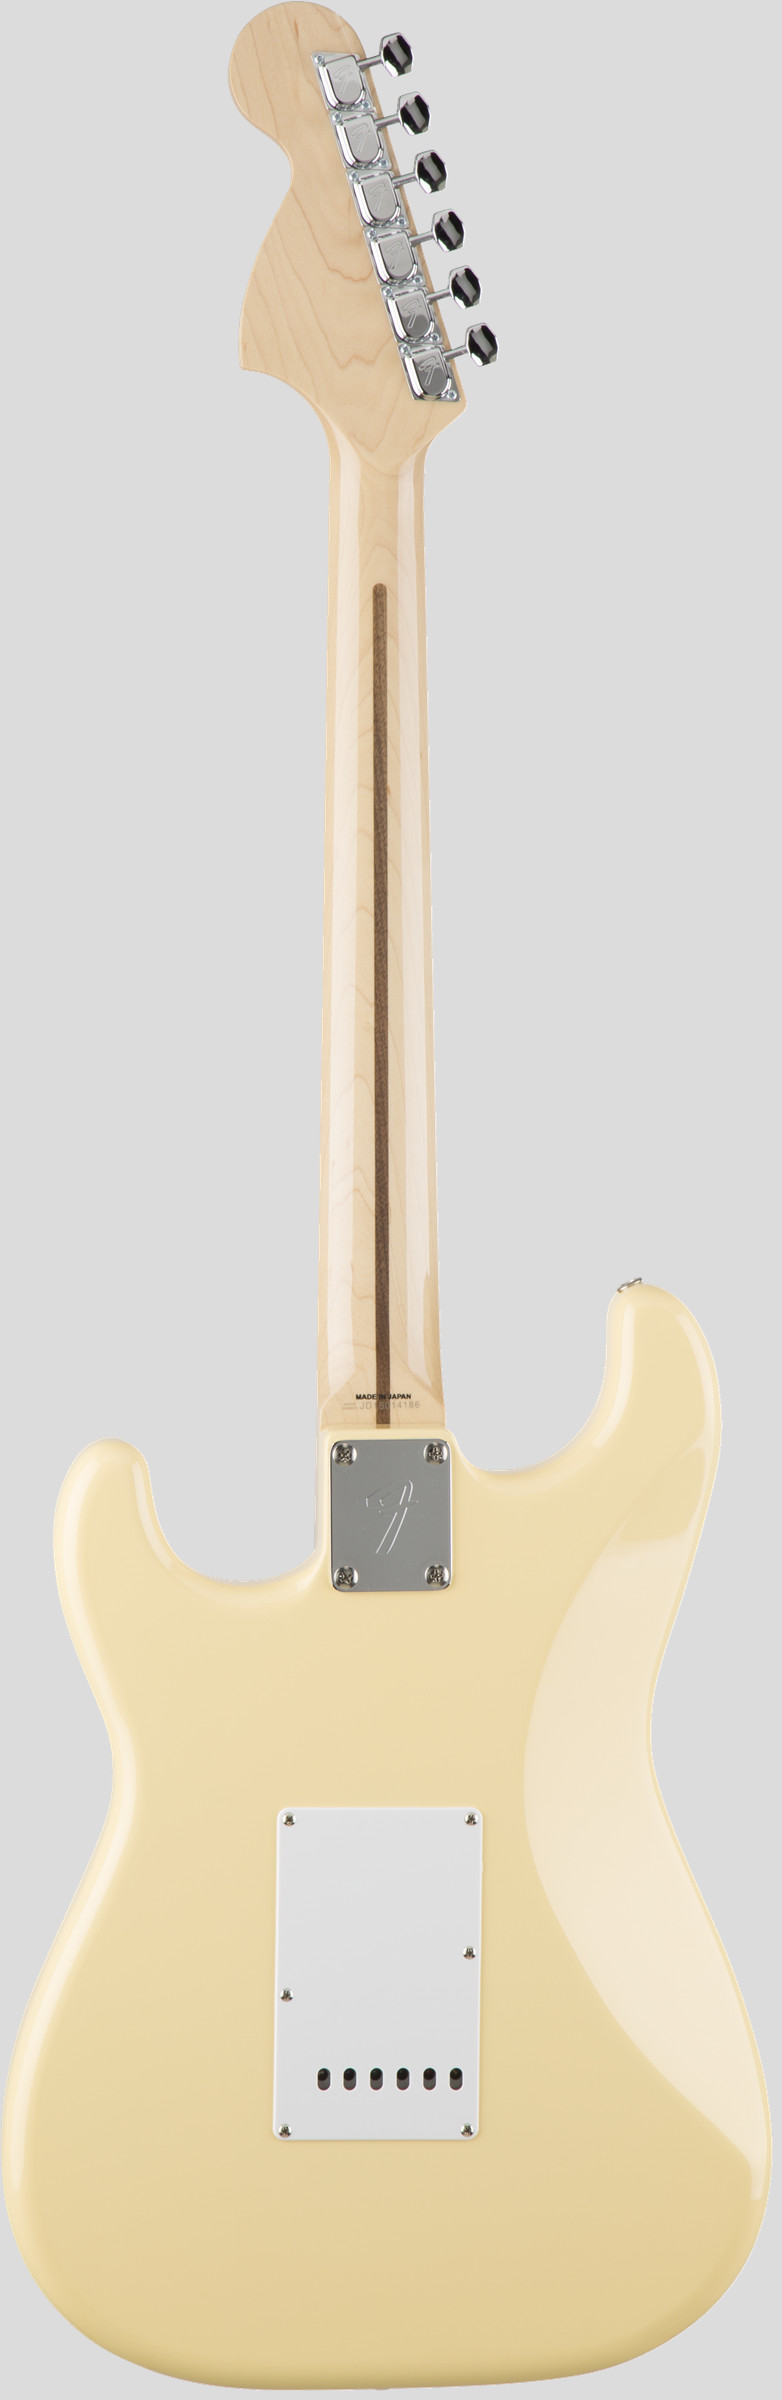 Fender Yngwie Malmsteen Japan Stratocaster Vintage White 2